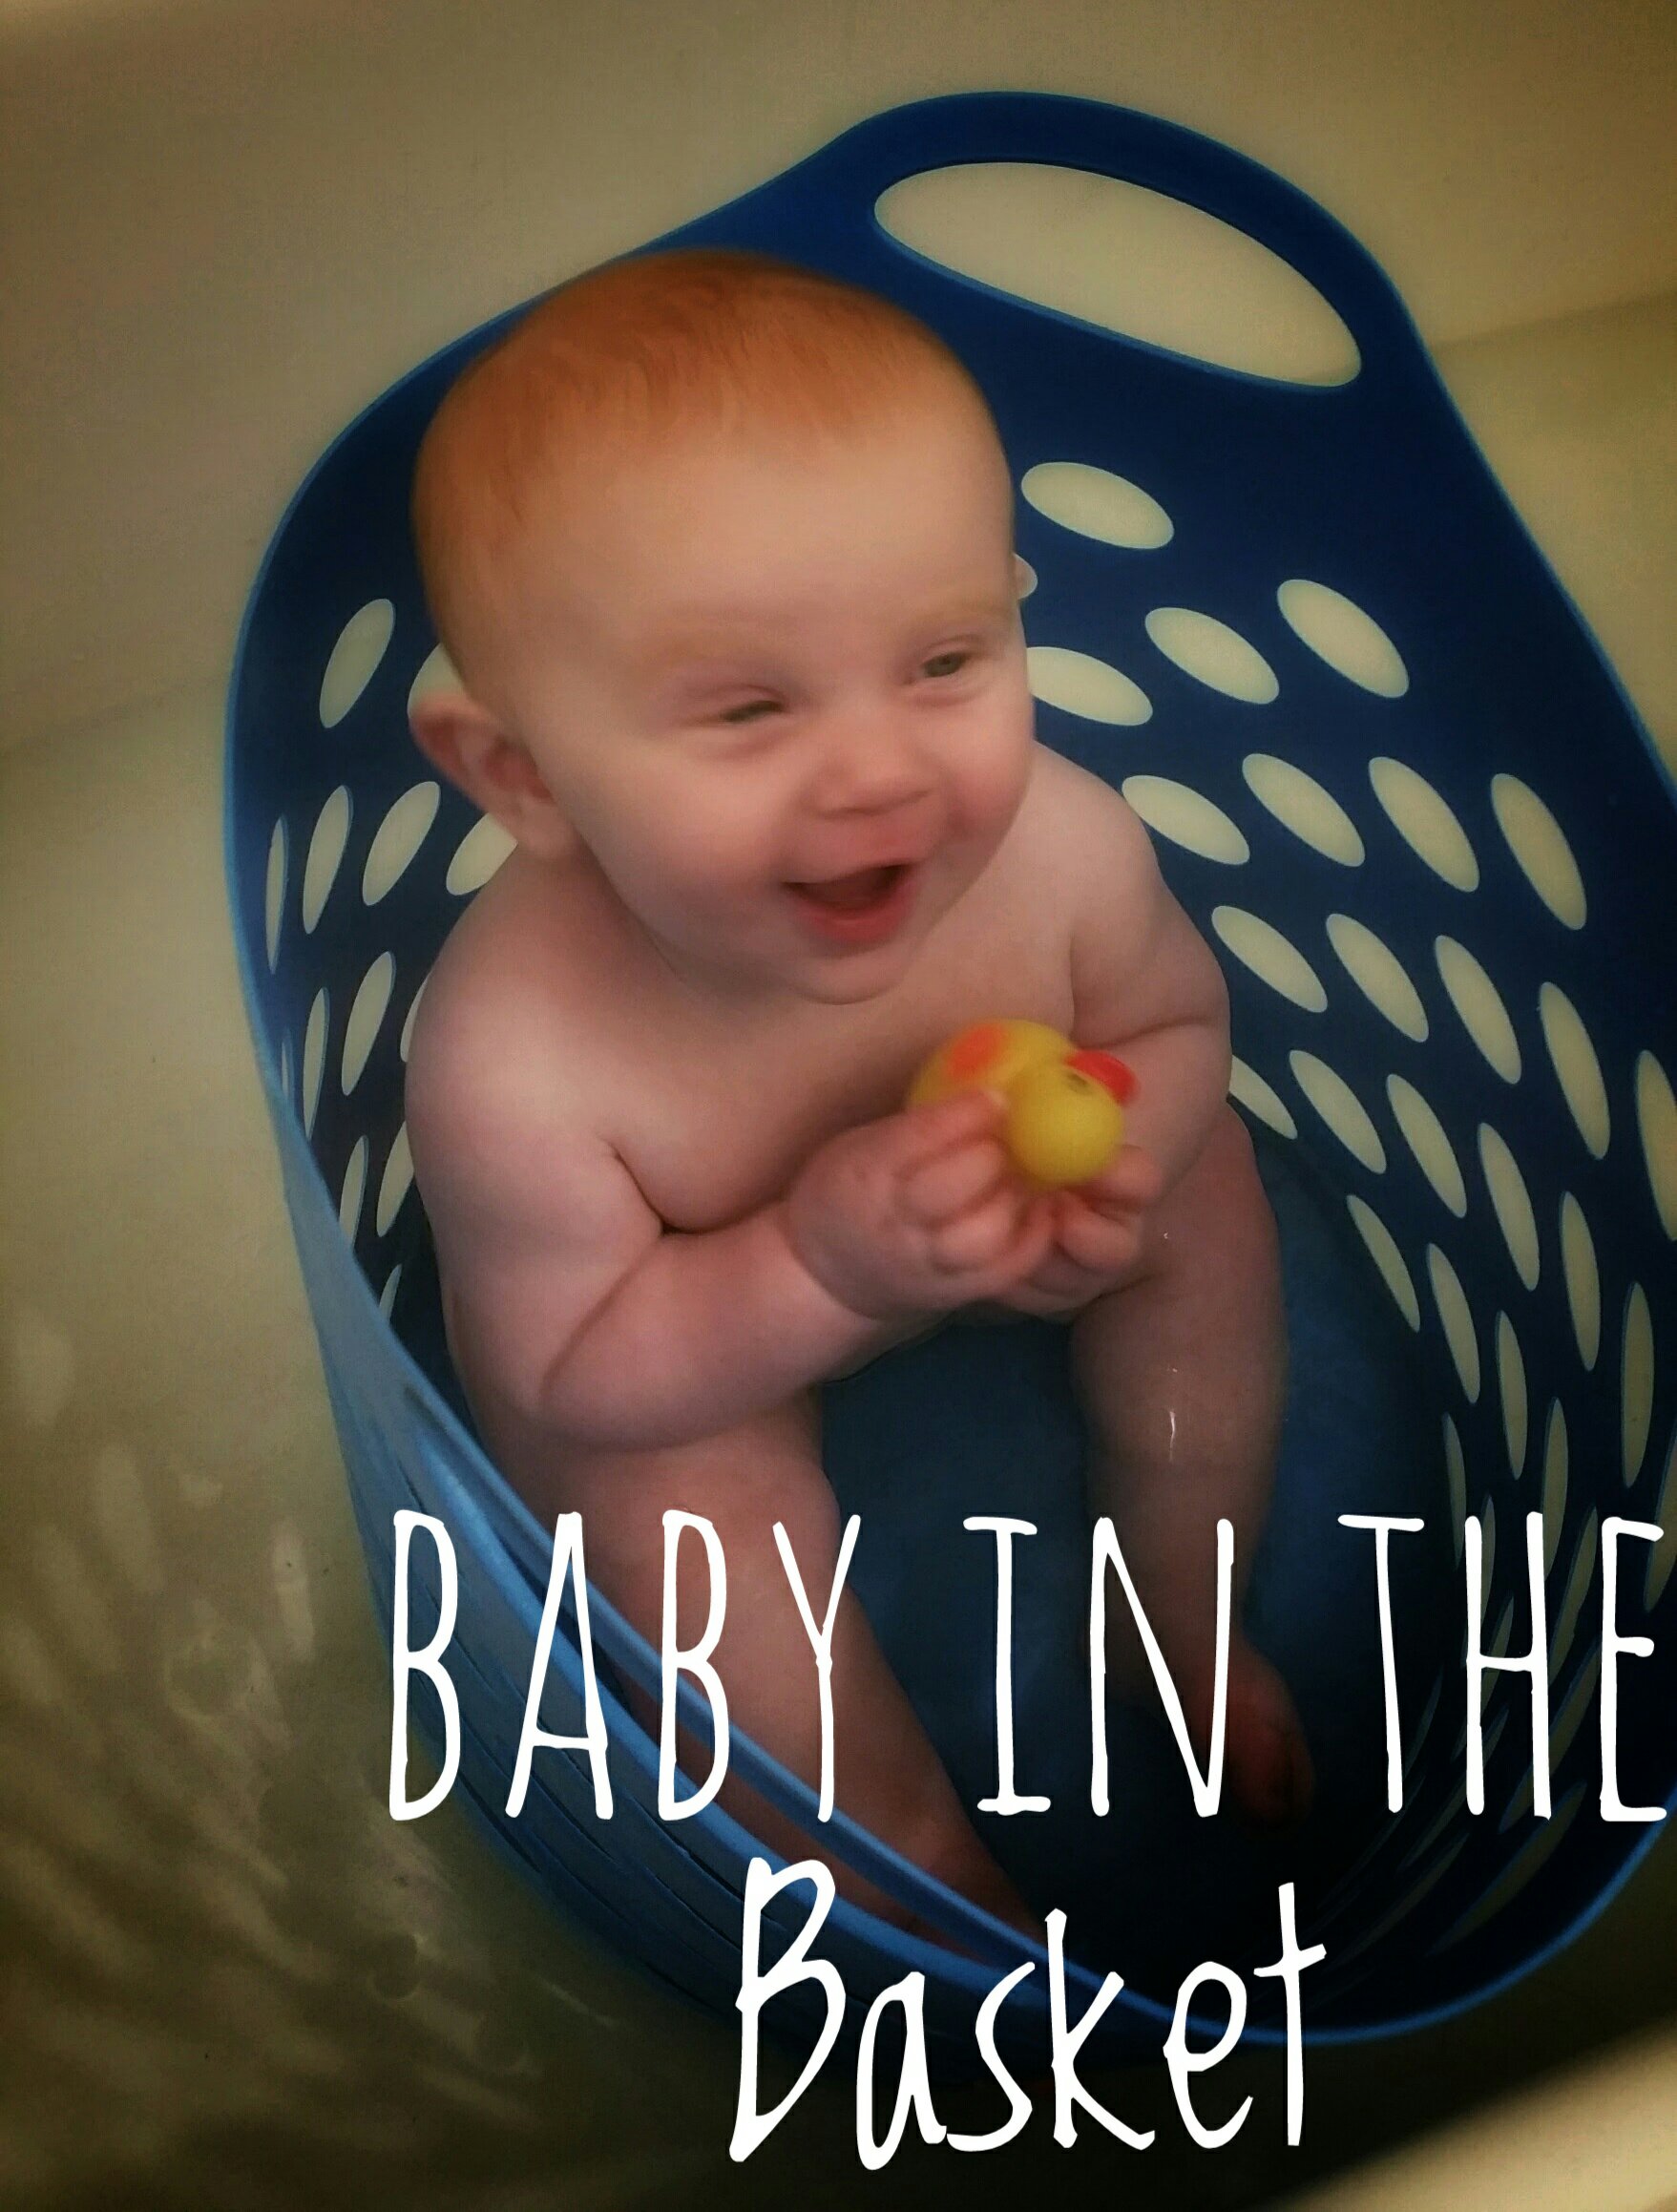 Bathtub Safety - Baby Hack